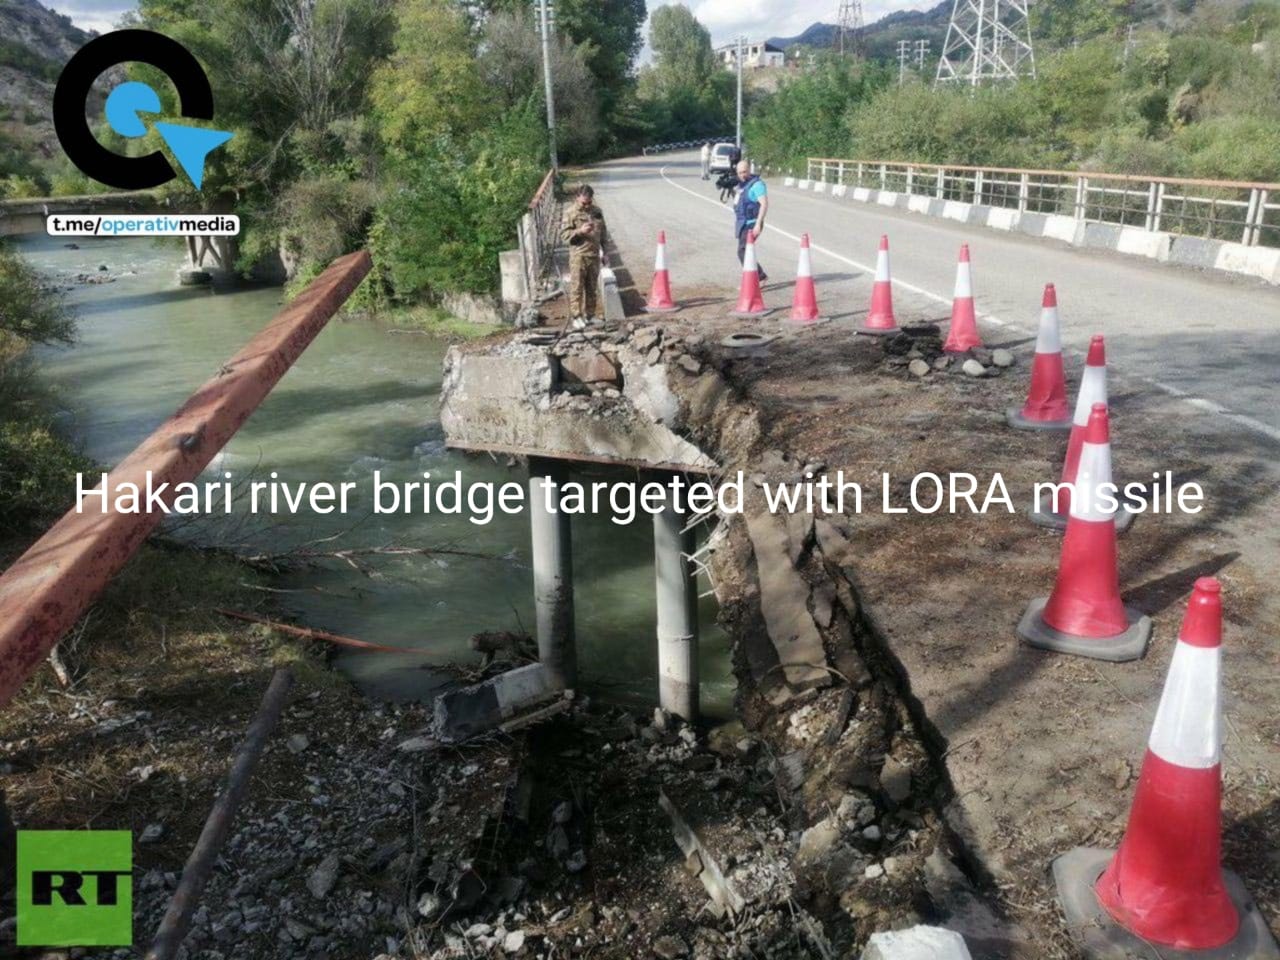 Bridge destroyed at Hakari river by LORA ballistic missile